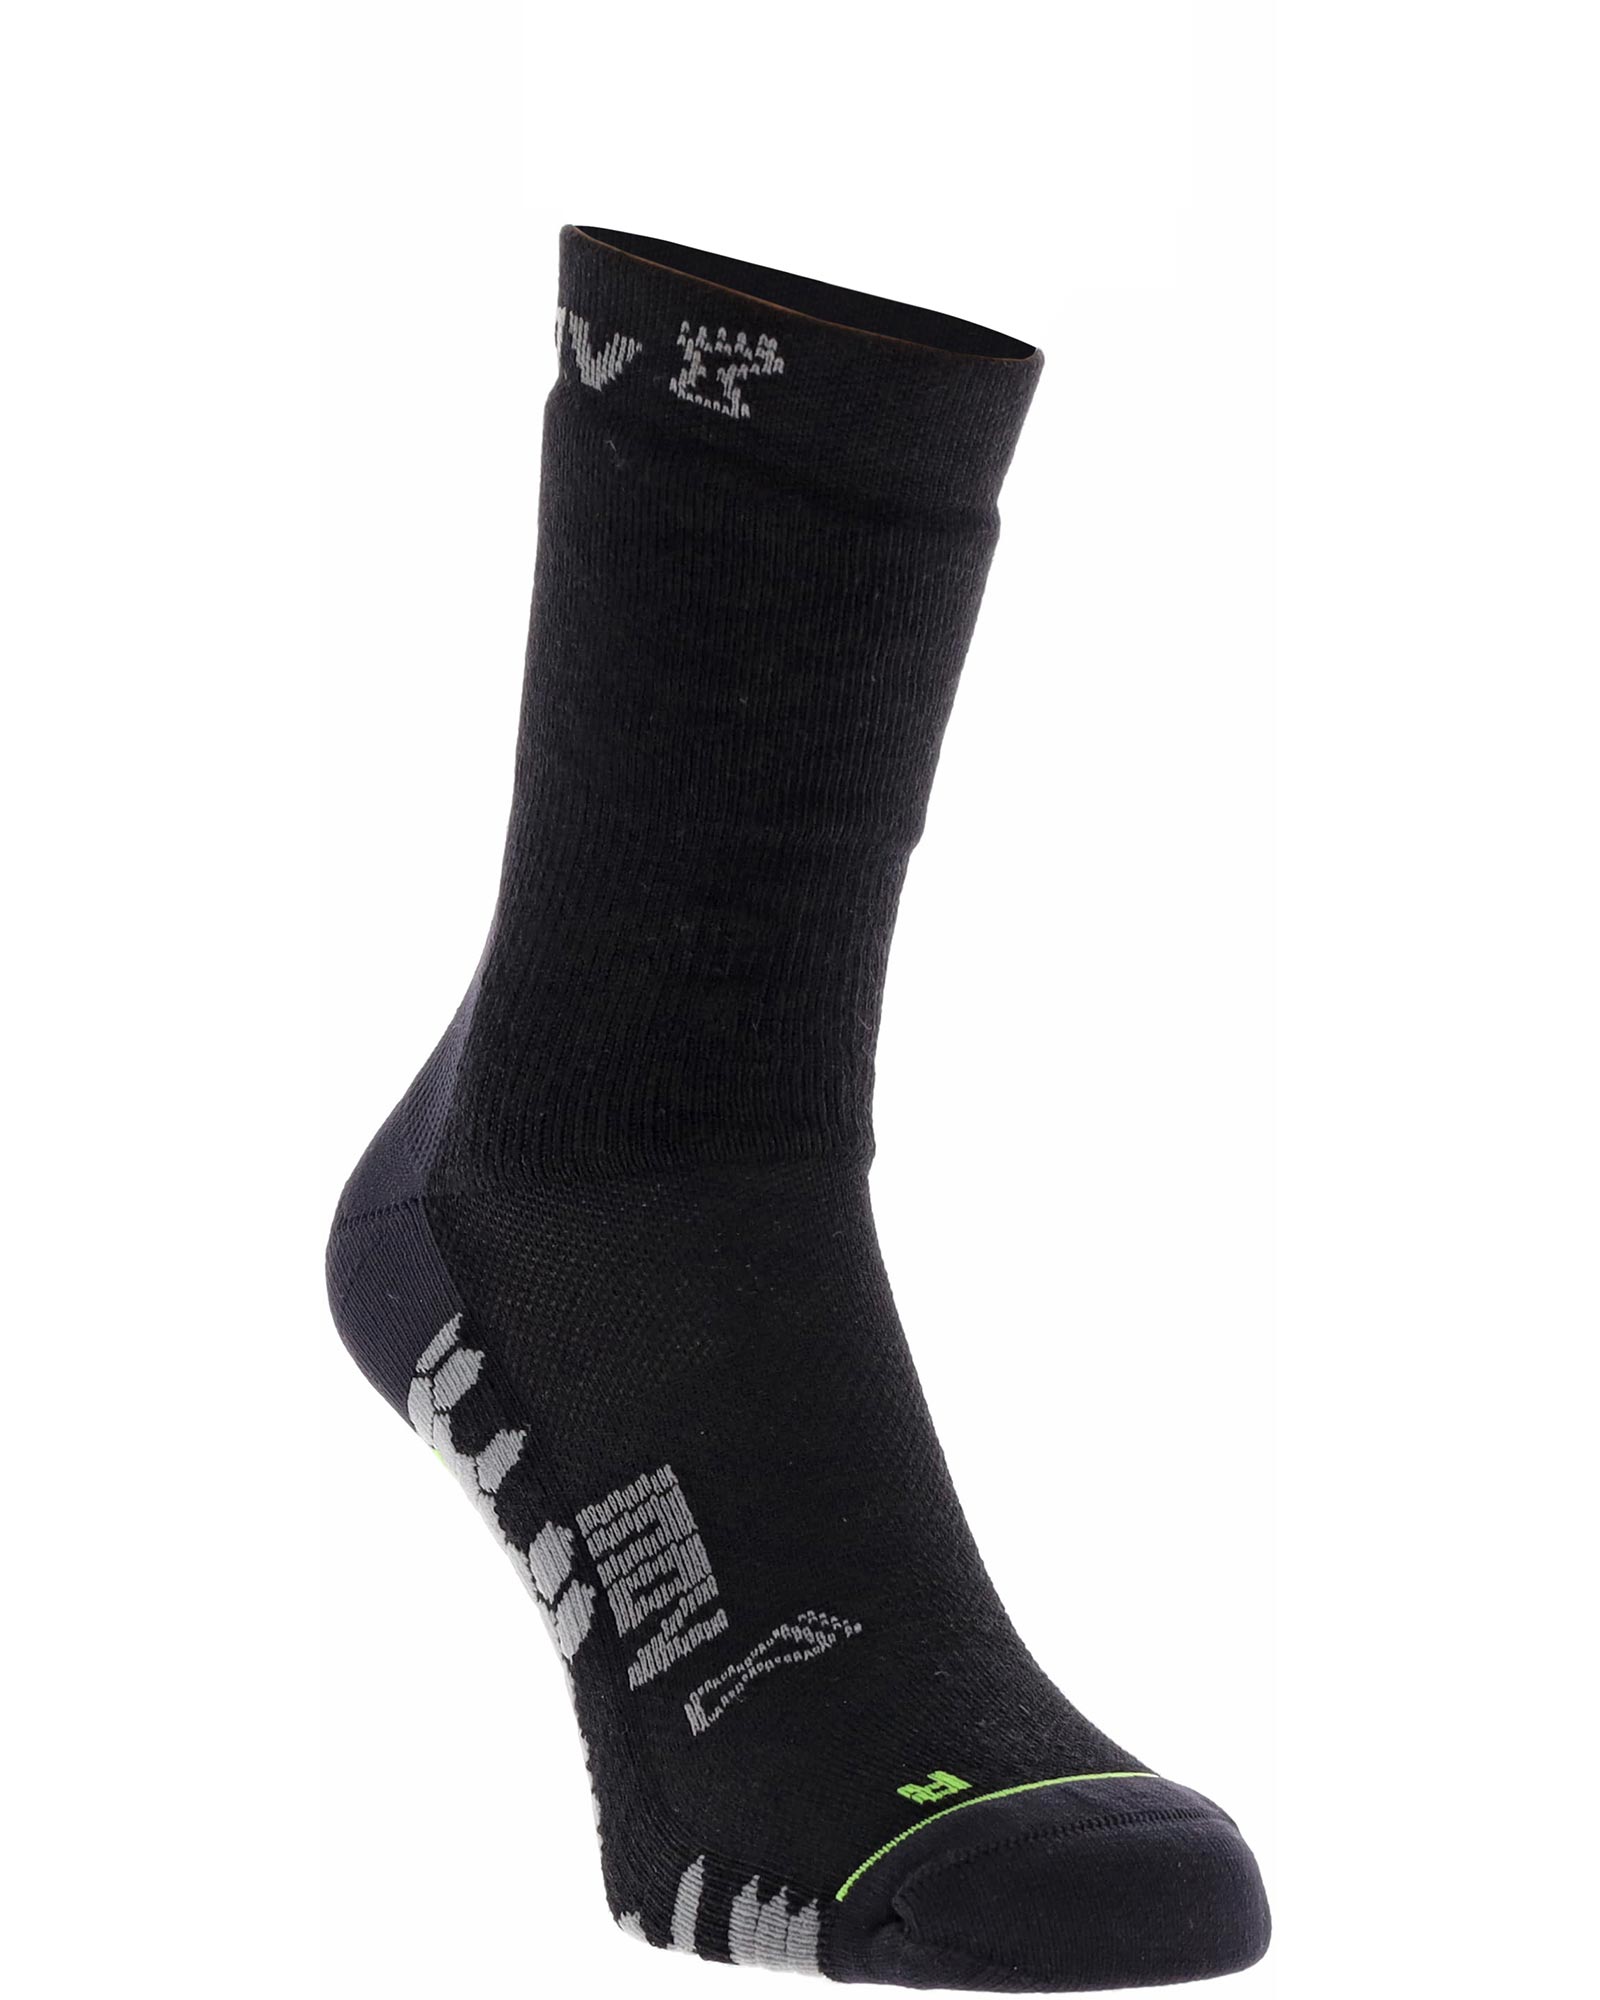 Inov 8 Thermo High Socks - Black/Grey M